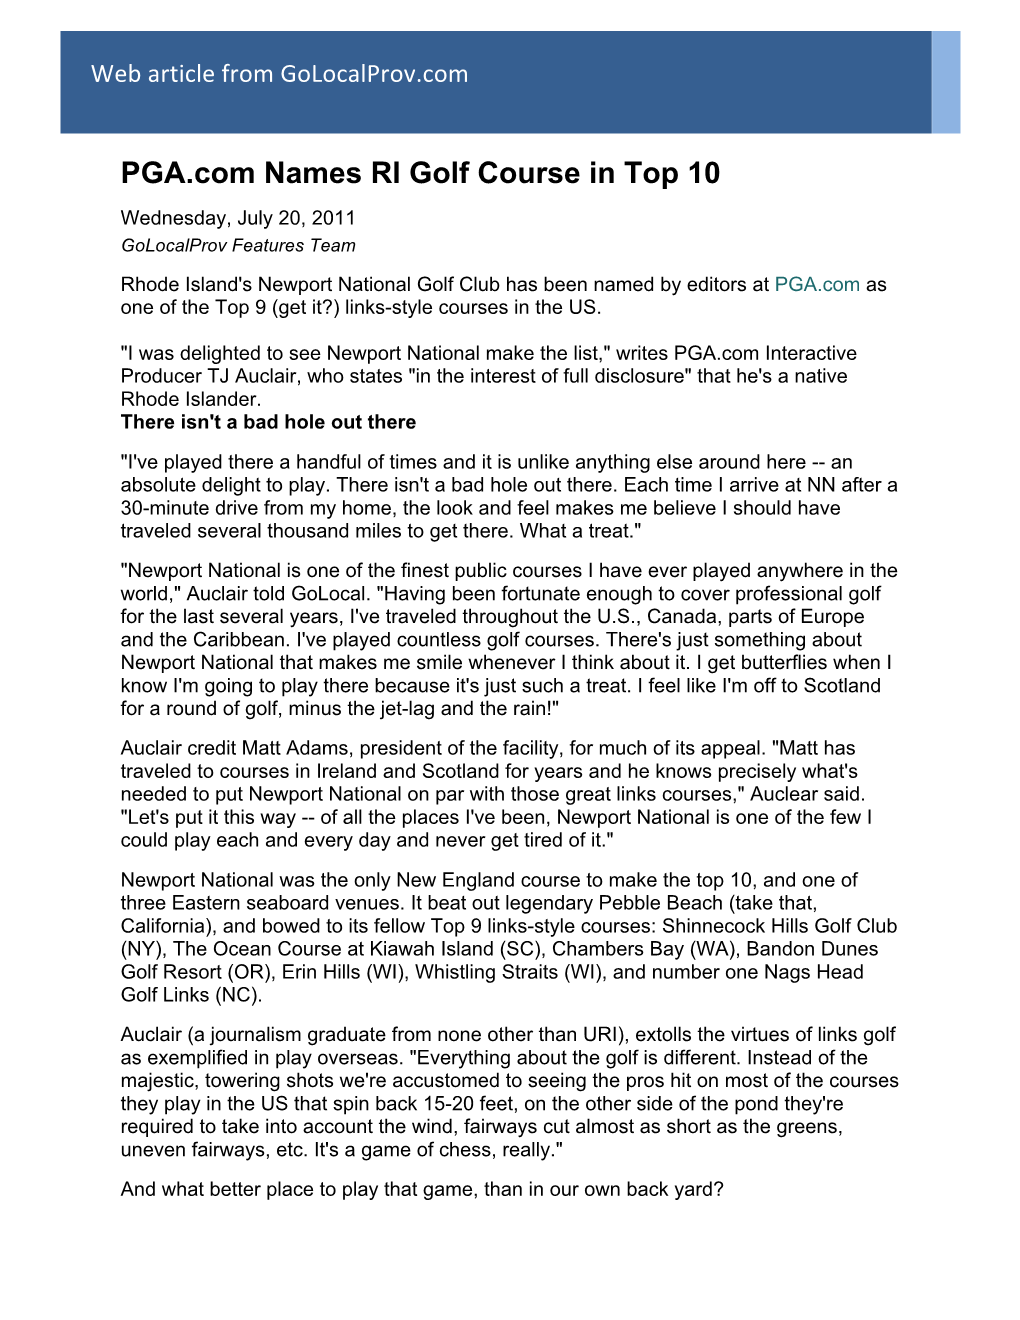 PGA.Com Names RI Golf Course in Top 10 Wednesday, July 20, 2011 Golocalprov Features Team